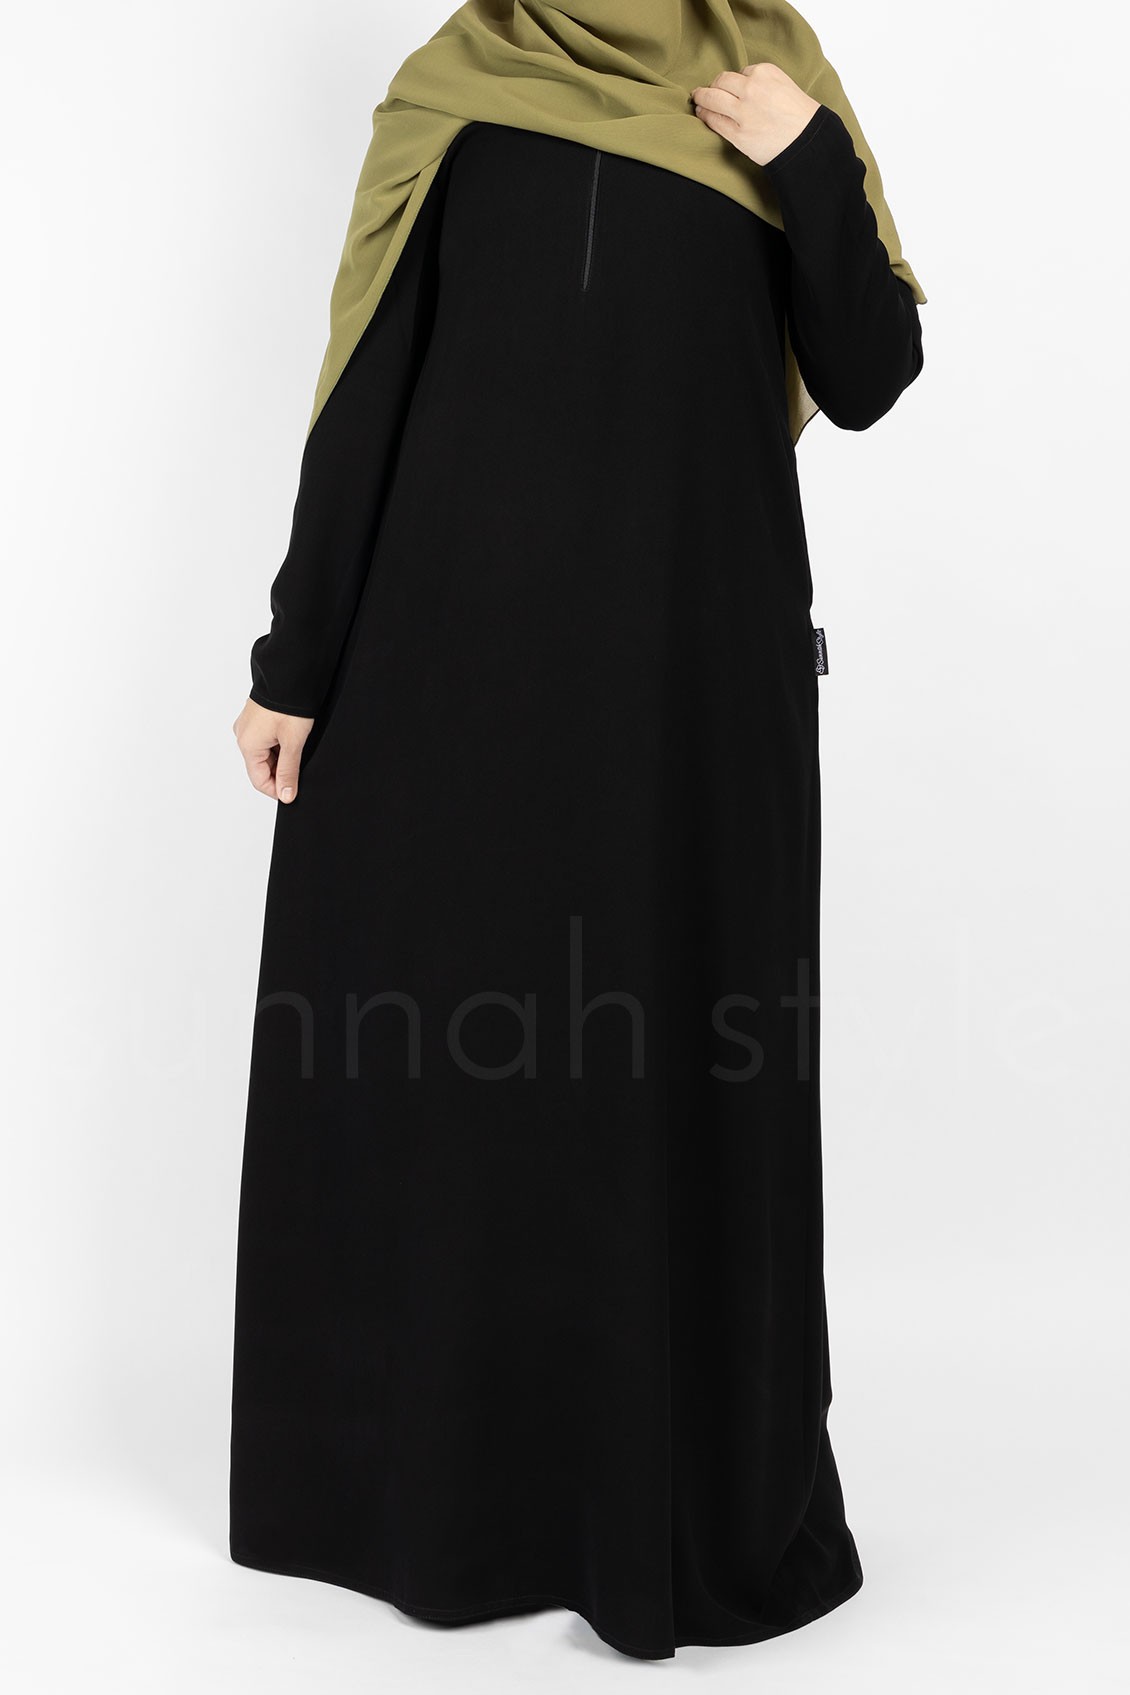 Sunnah Style Essentials Closed Abaya Slim Black